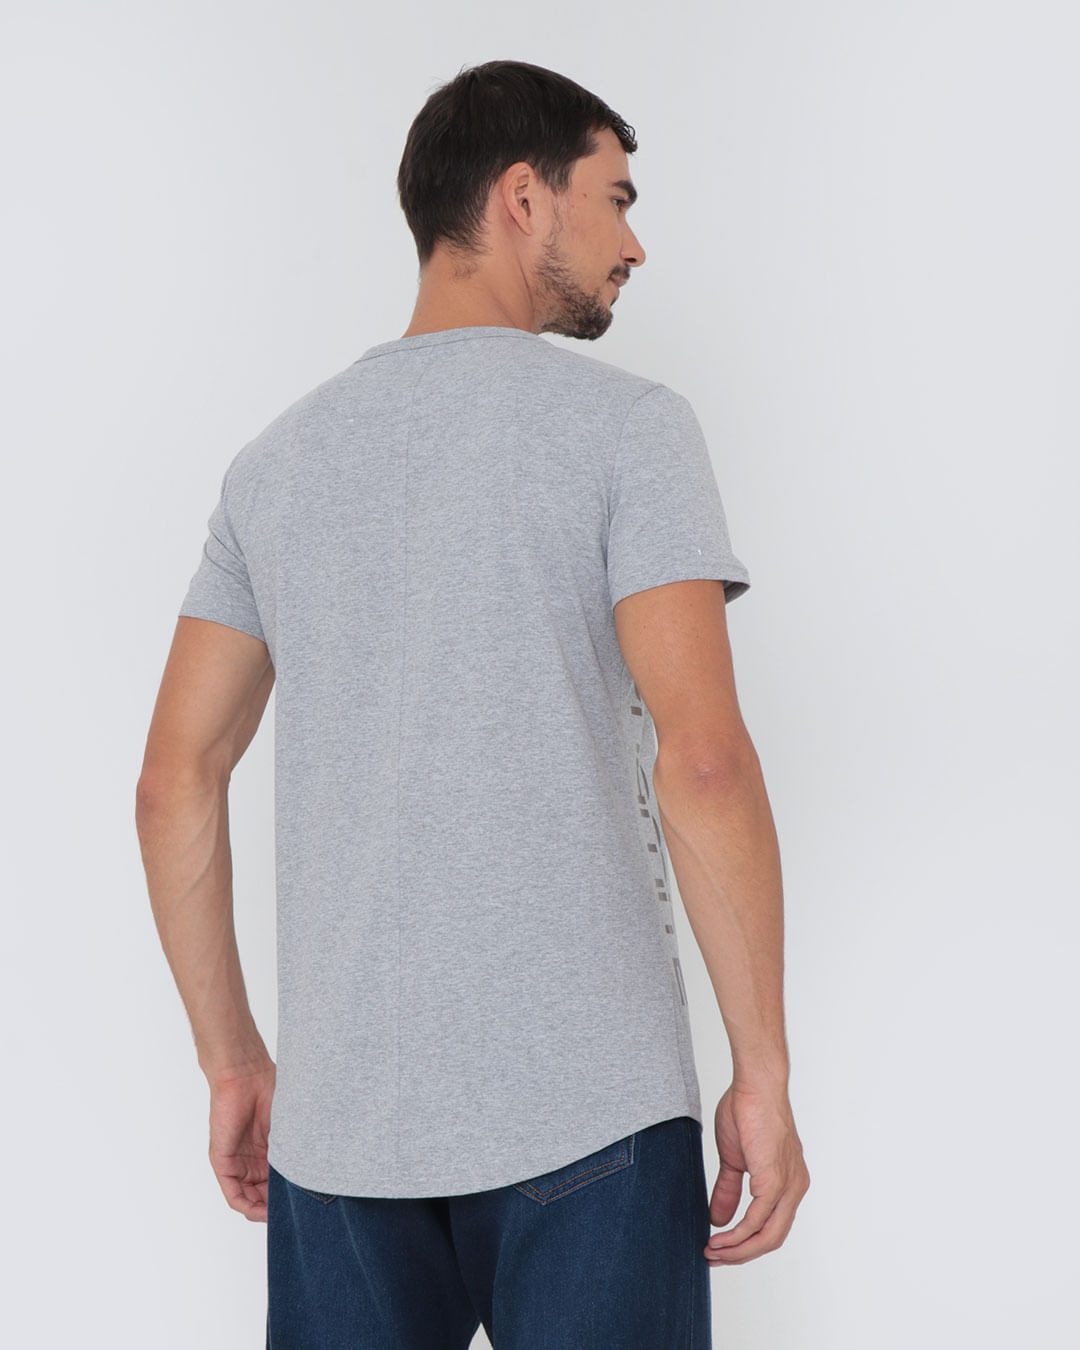 Camiseta-9534-Long-Fashion---Cinza-Claro